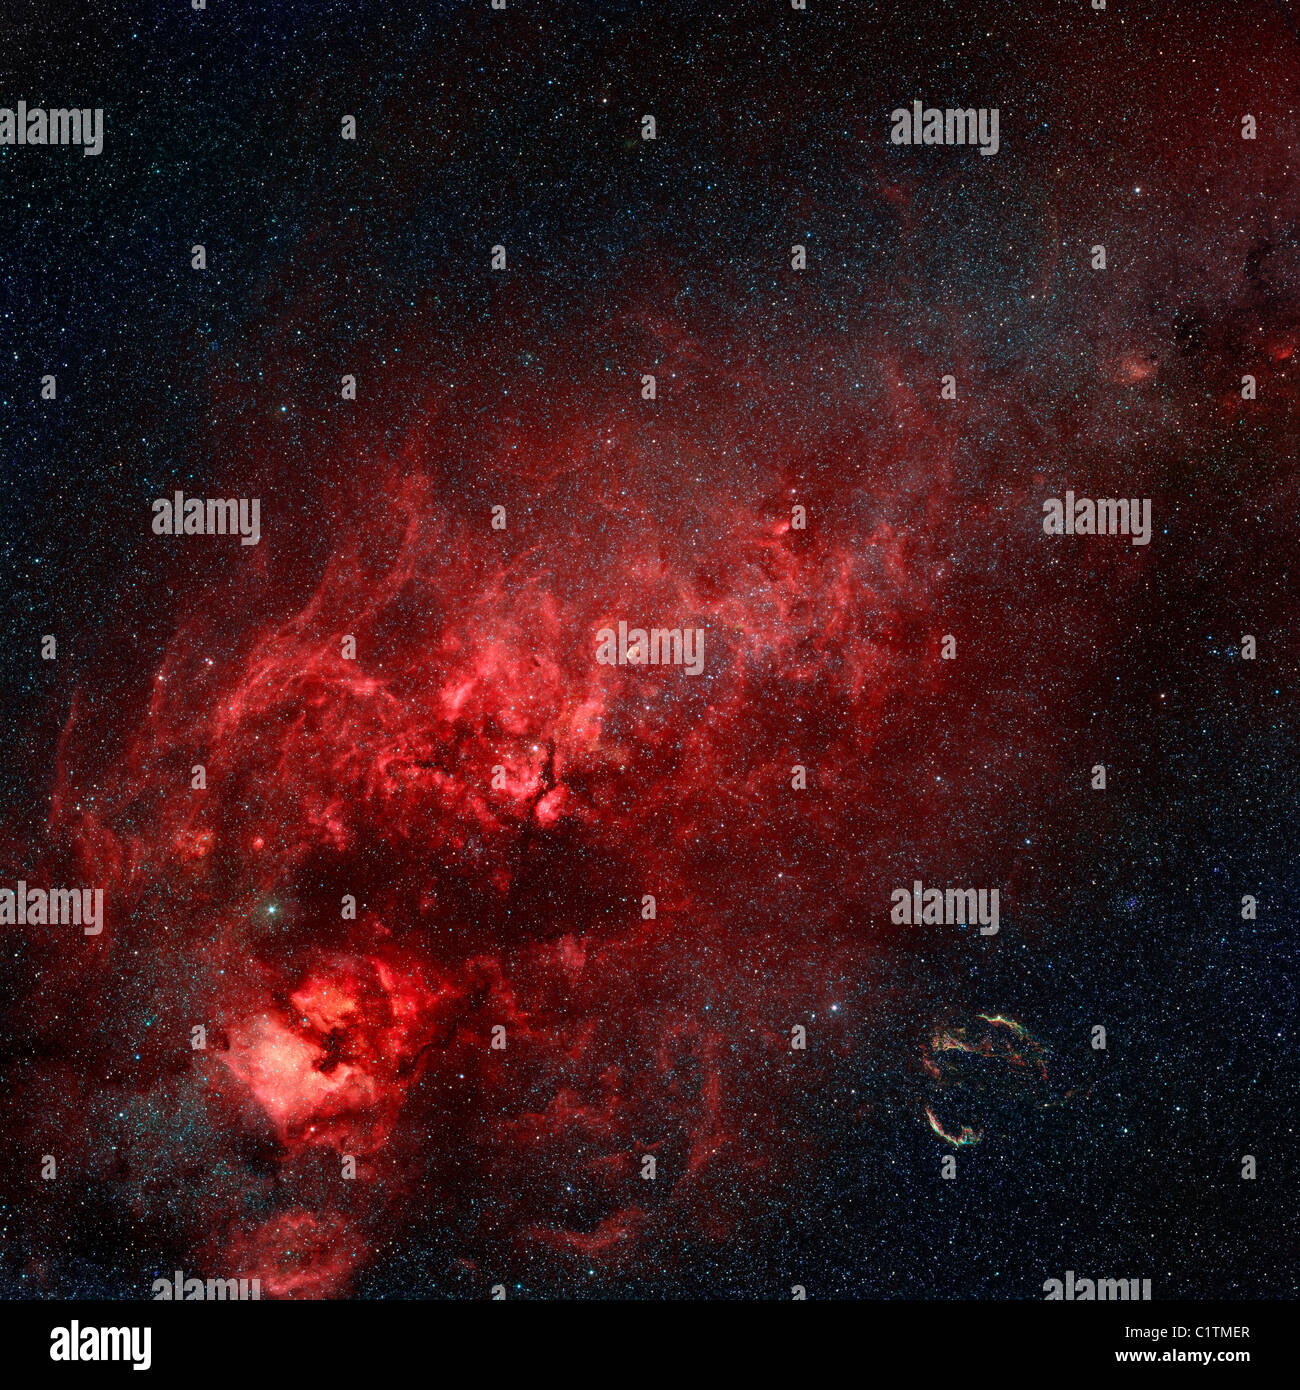 Constellation Cygnus with multiple nebulae visible. Stock Photo